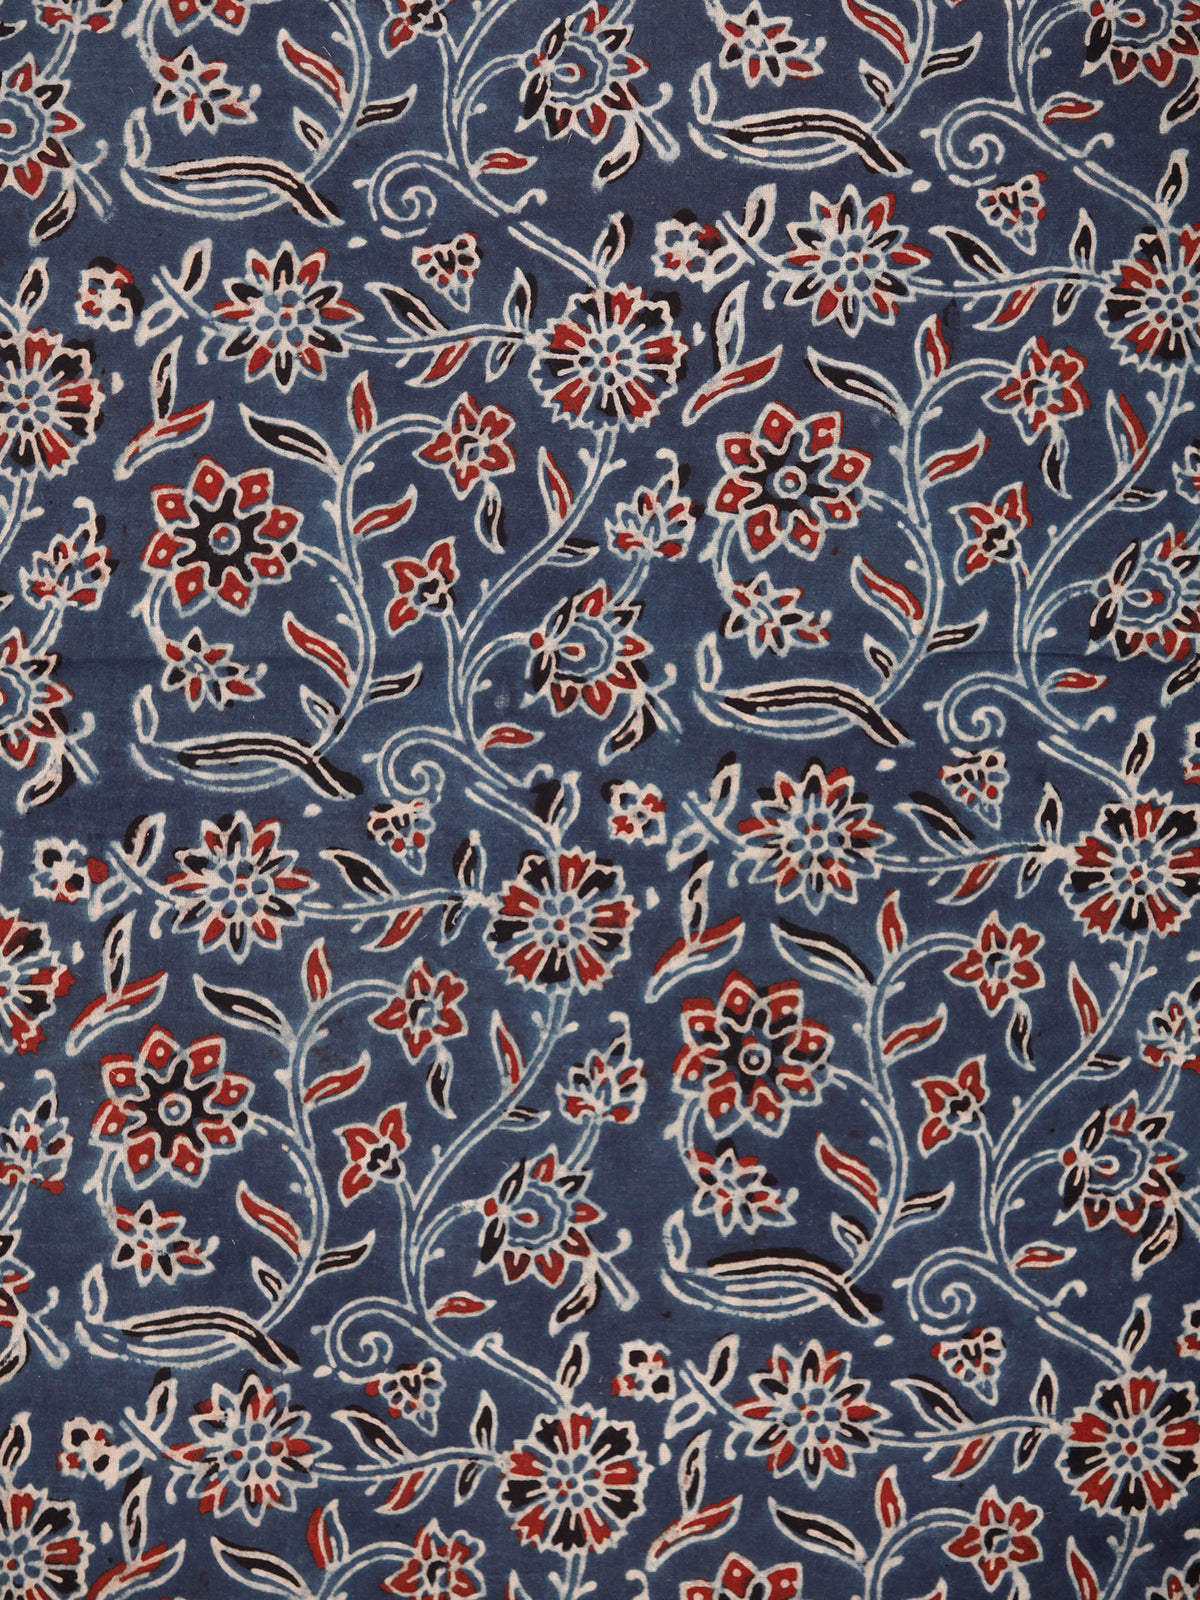 Indigo Maroon Black Ivory Ajrakh Block Printed Cotton Fabric Per Meter - F003F1768